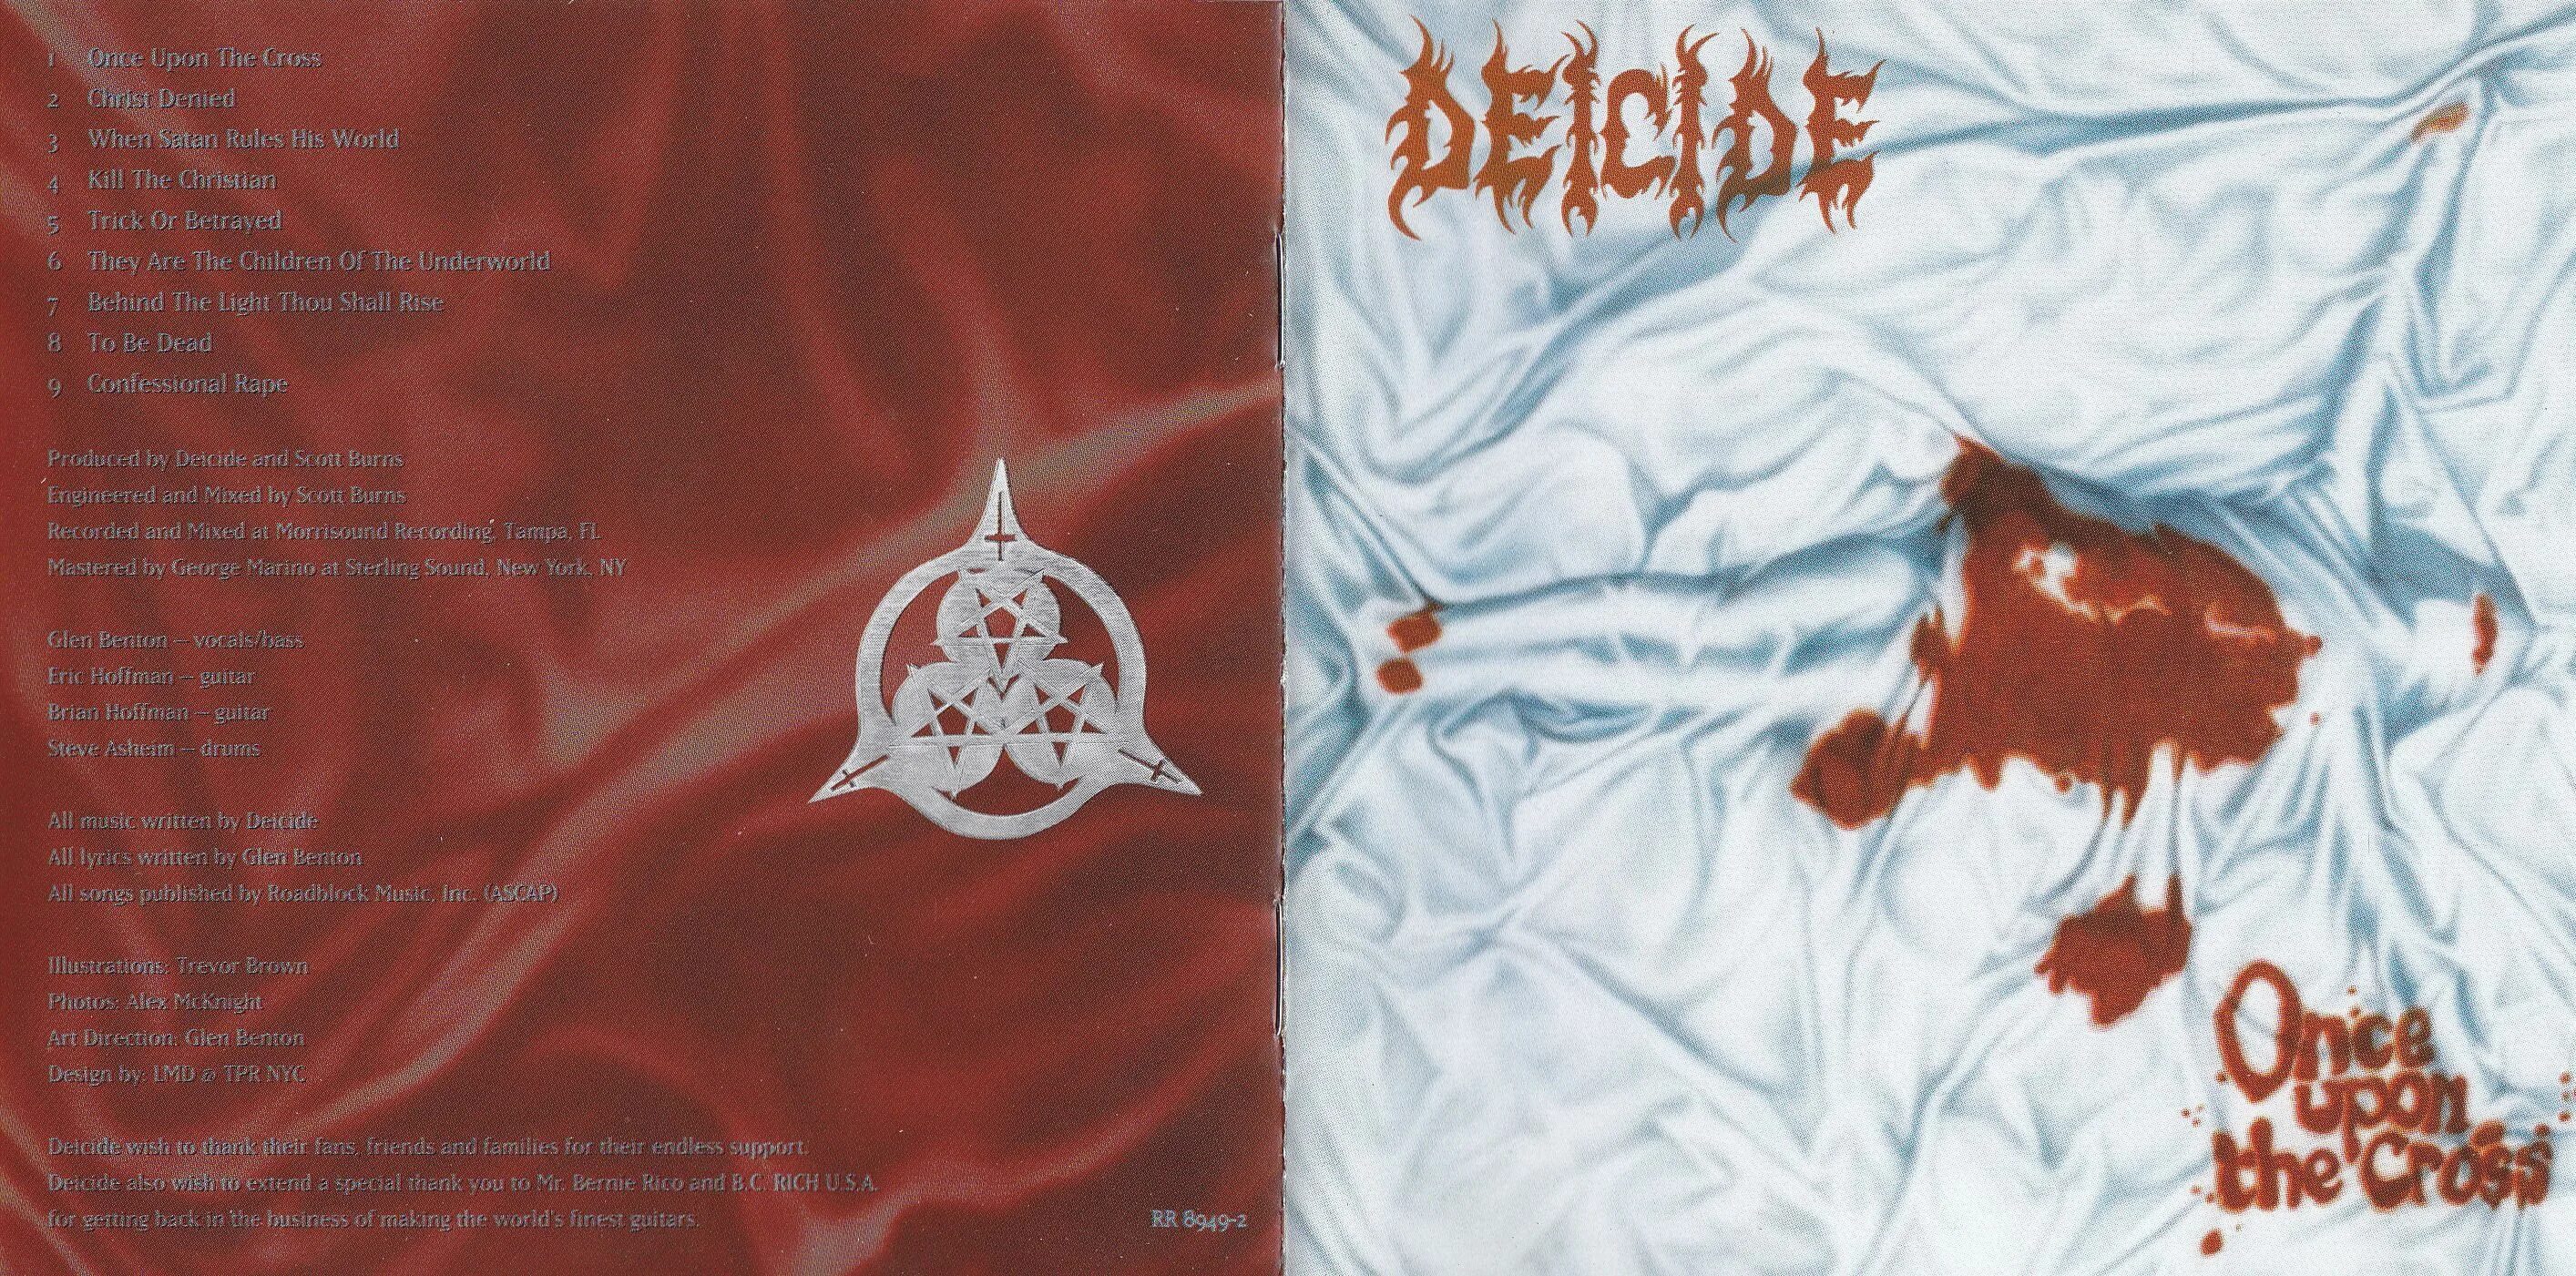 His world com. Deicide 1995 once upon the Cross album Cover. Deicide Стив Эшейм. Deicide once upon the Cross обложка.